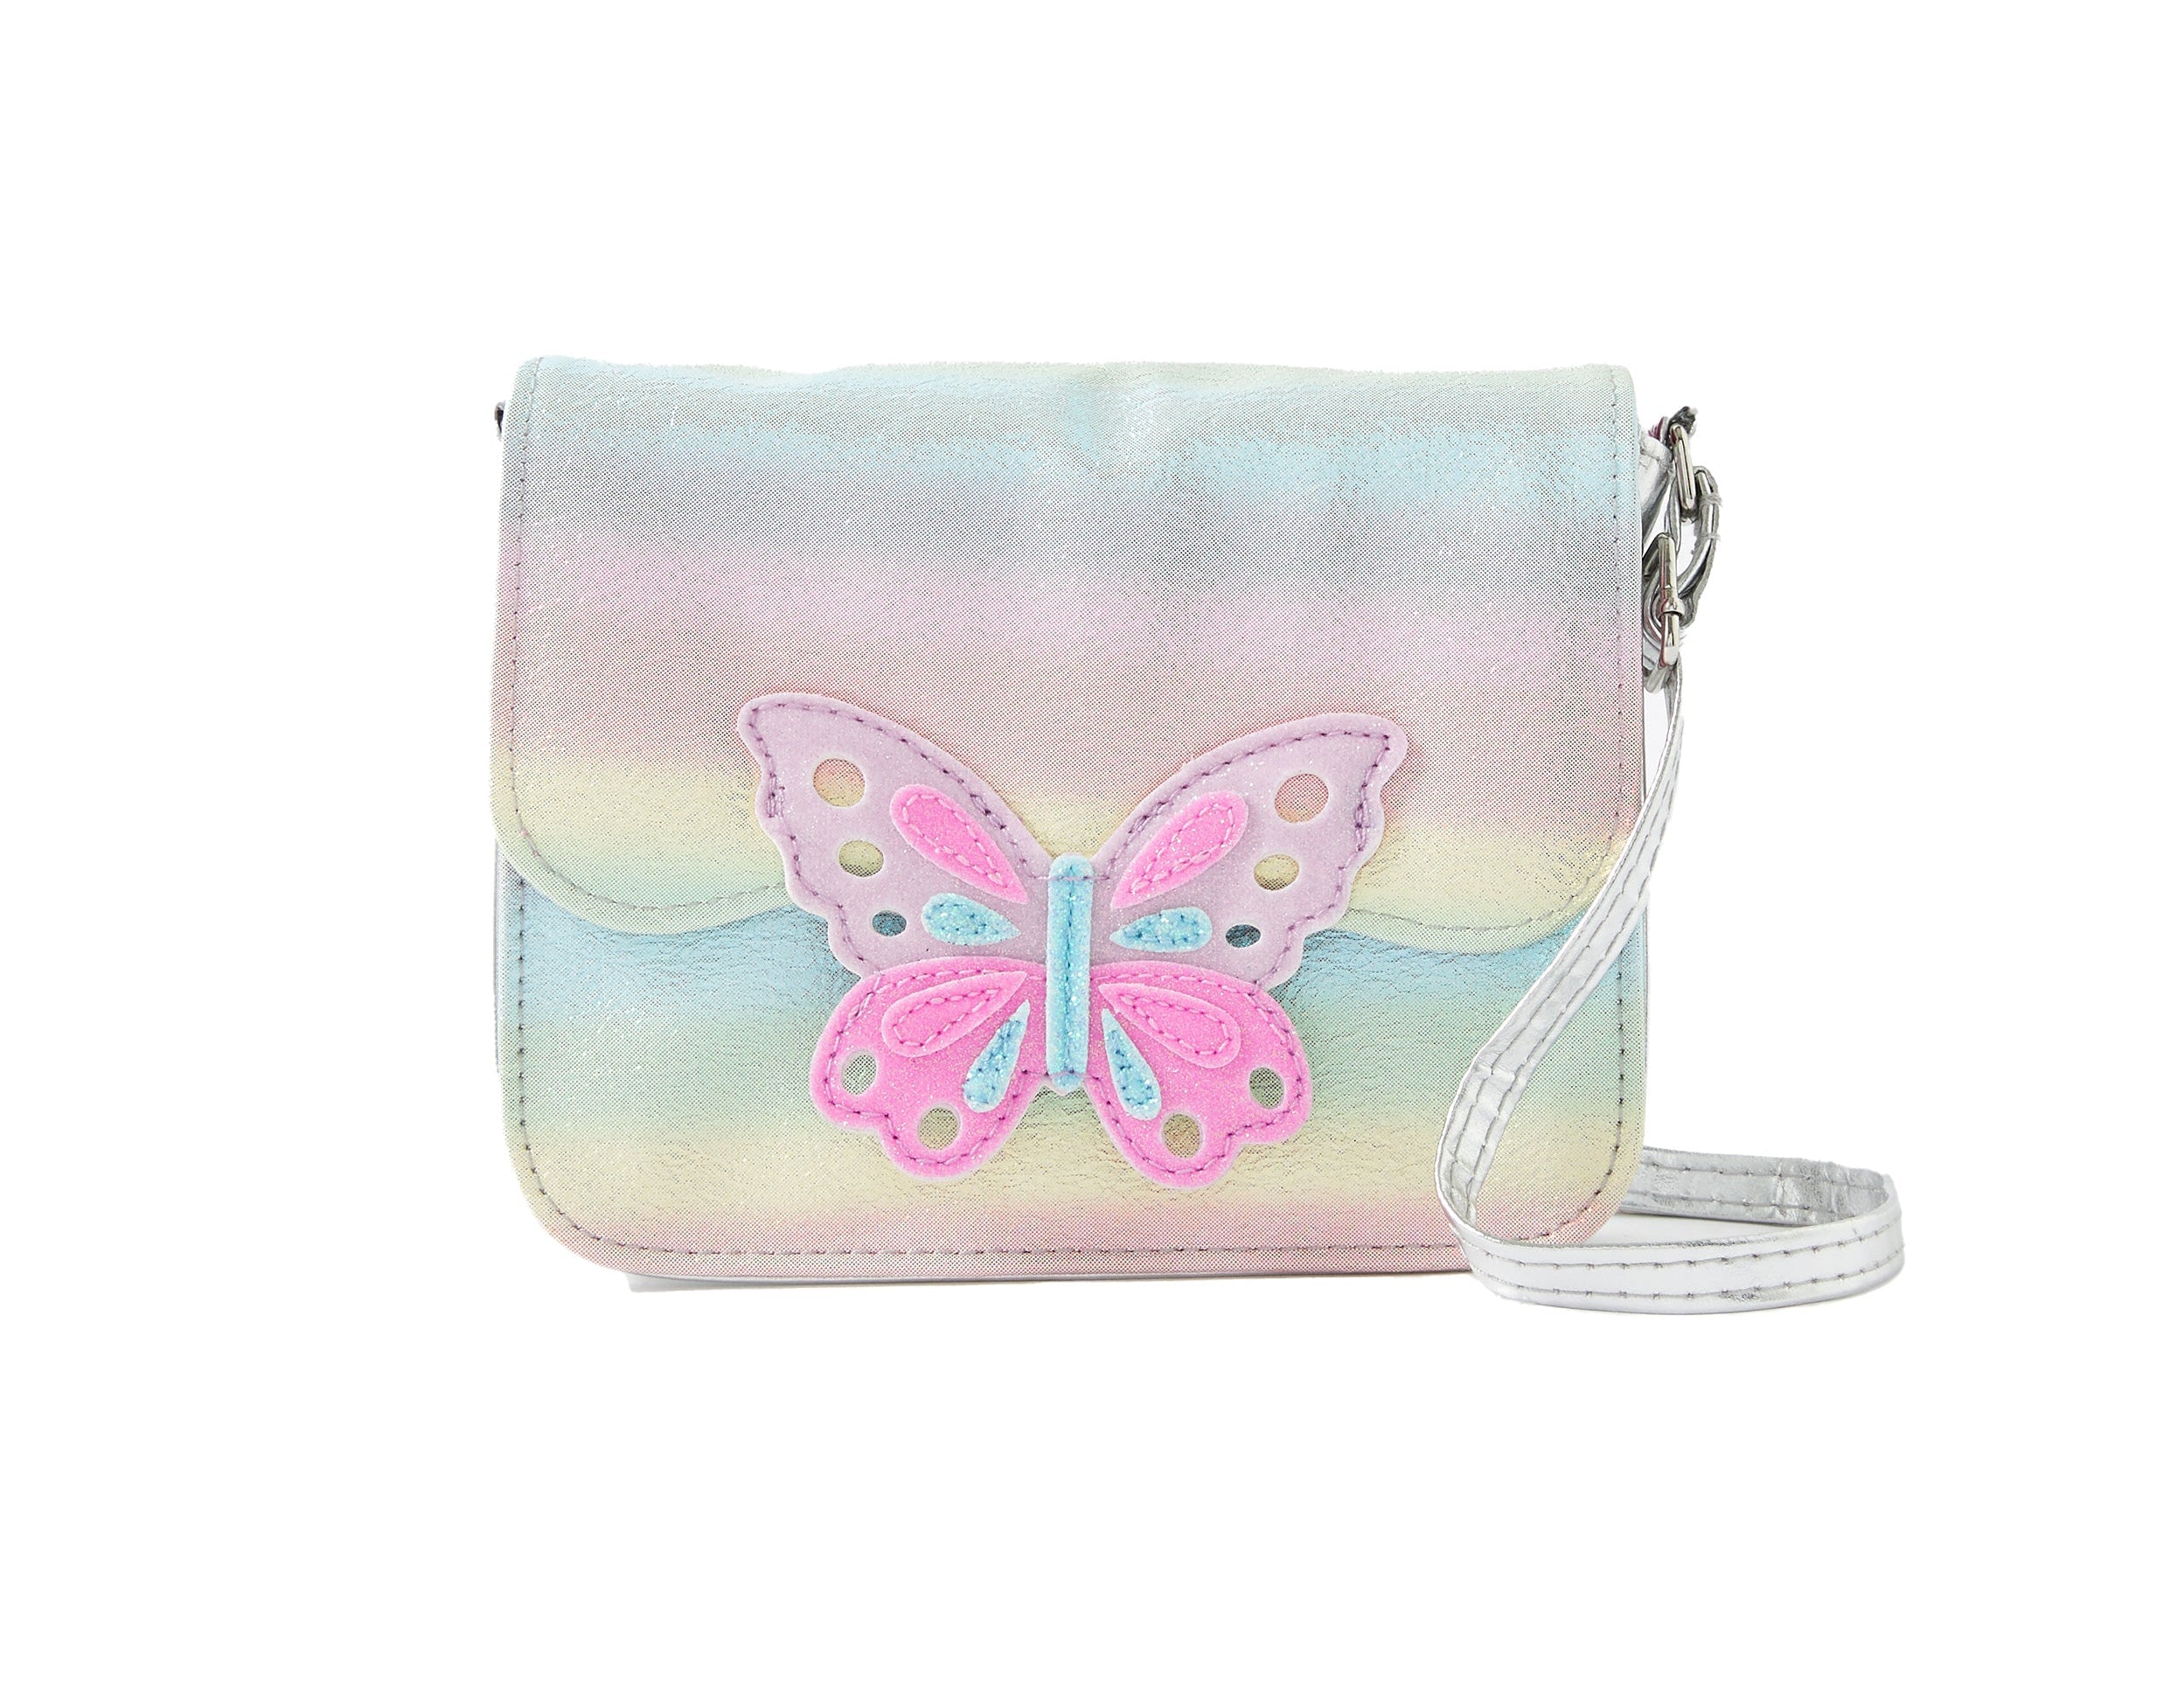 Accessorize Girl Butterfly Across Body Bag